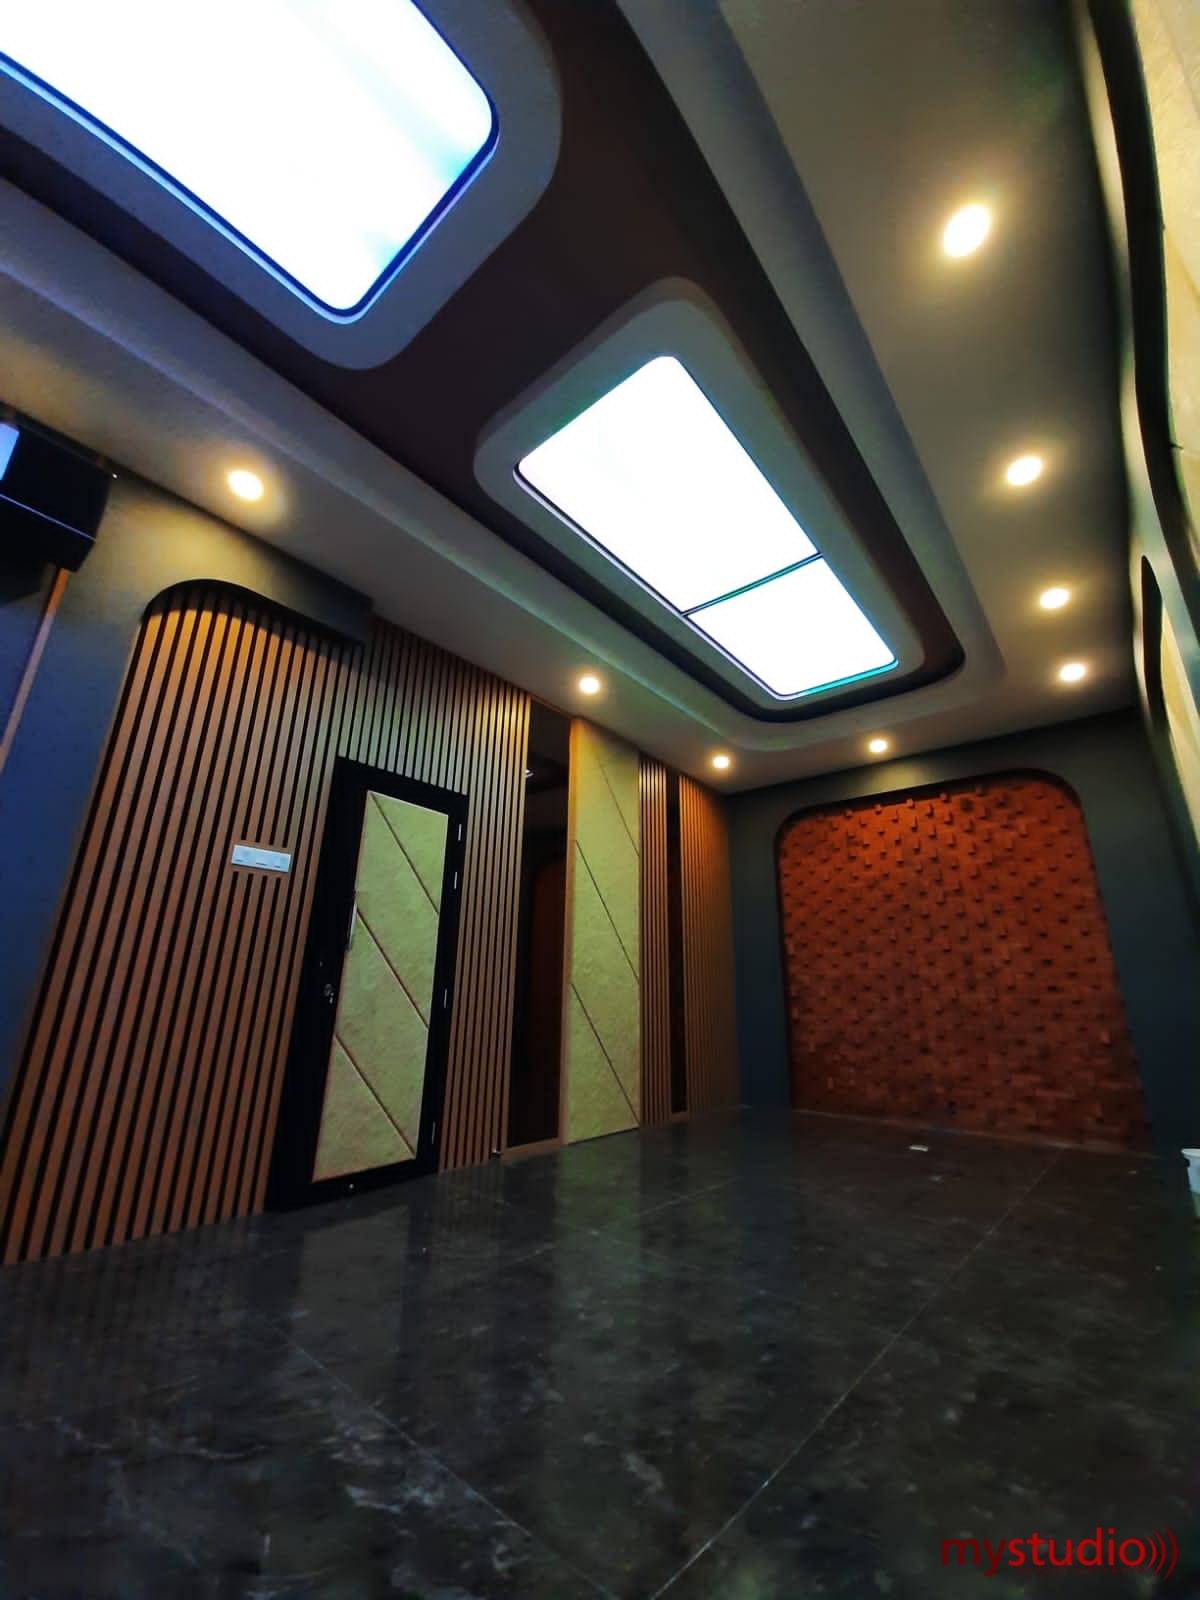 Ruang Karaoke Bapak Ajik Krisna Bali | Jasa Pembuatan Ruang Karaoke Bali |Peredam Akustik Ruang - Blog Mystudio